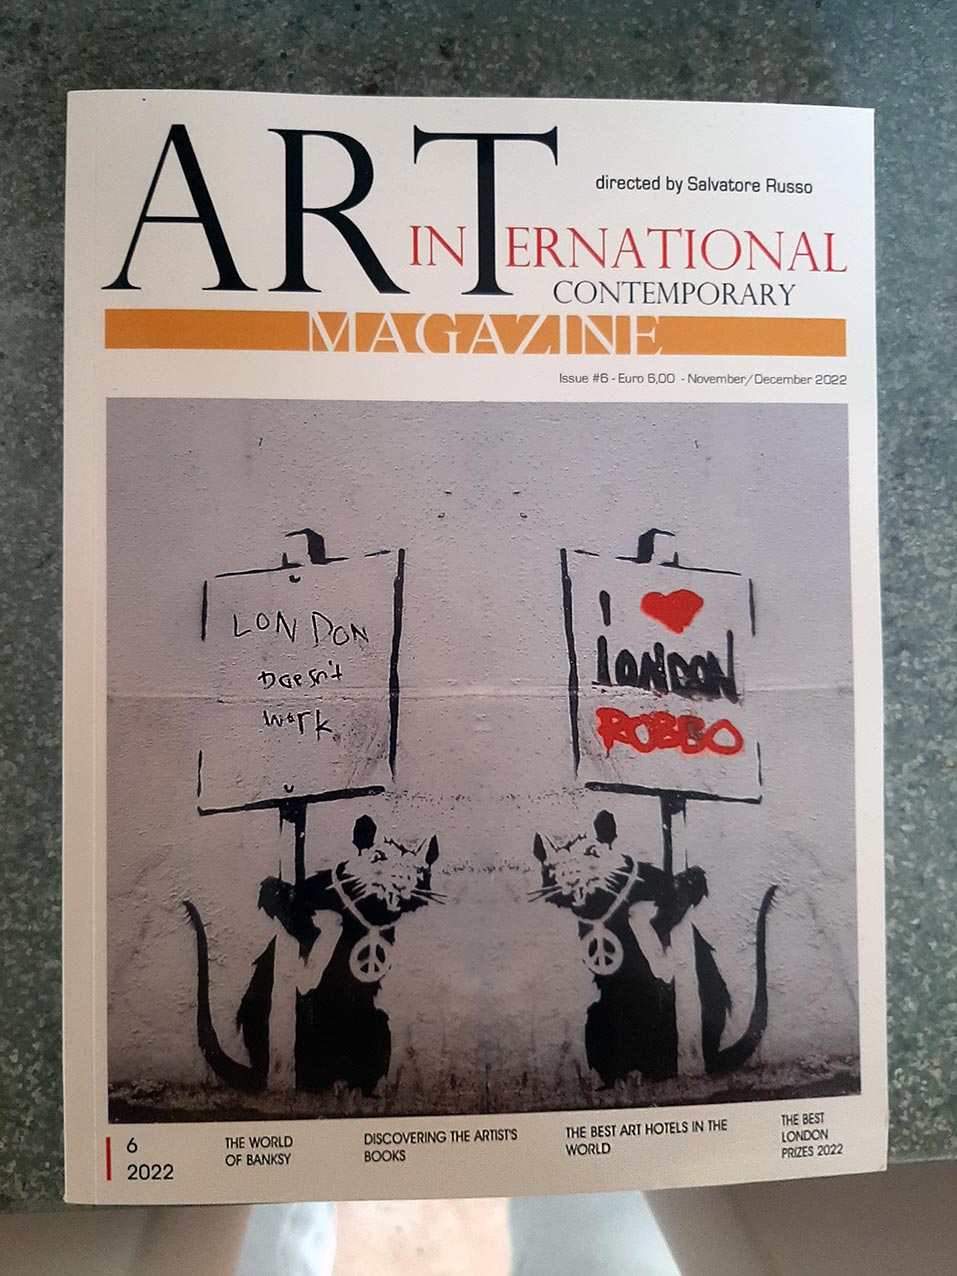 2022-December-London-Prize-Art-International-Contemporary-Magazine-N6-Cover